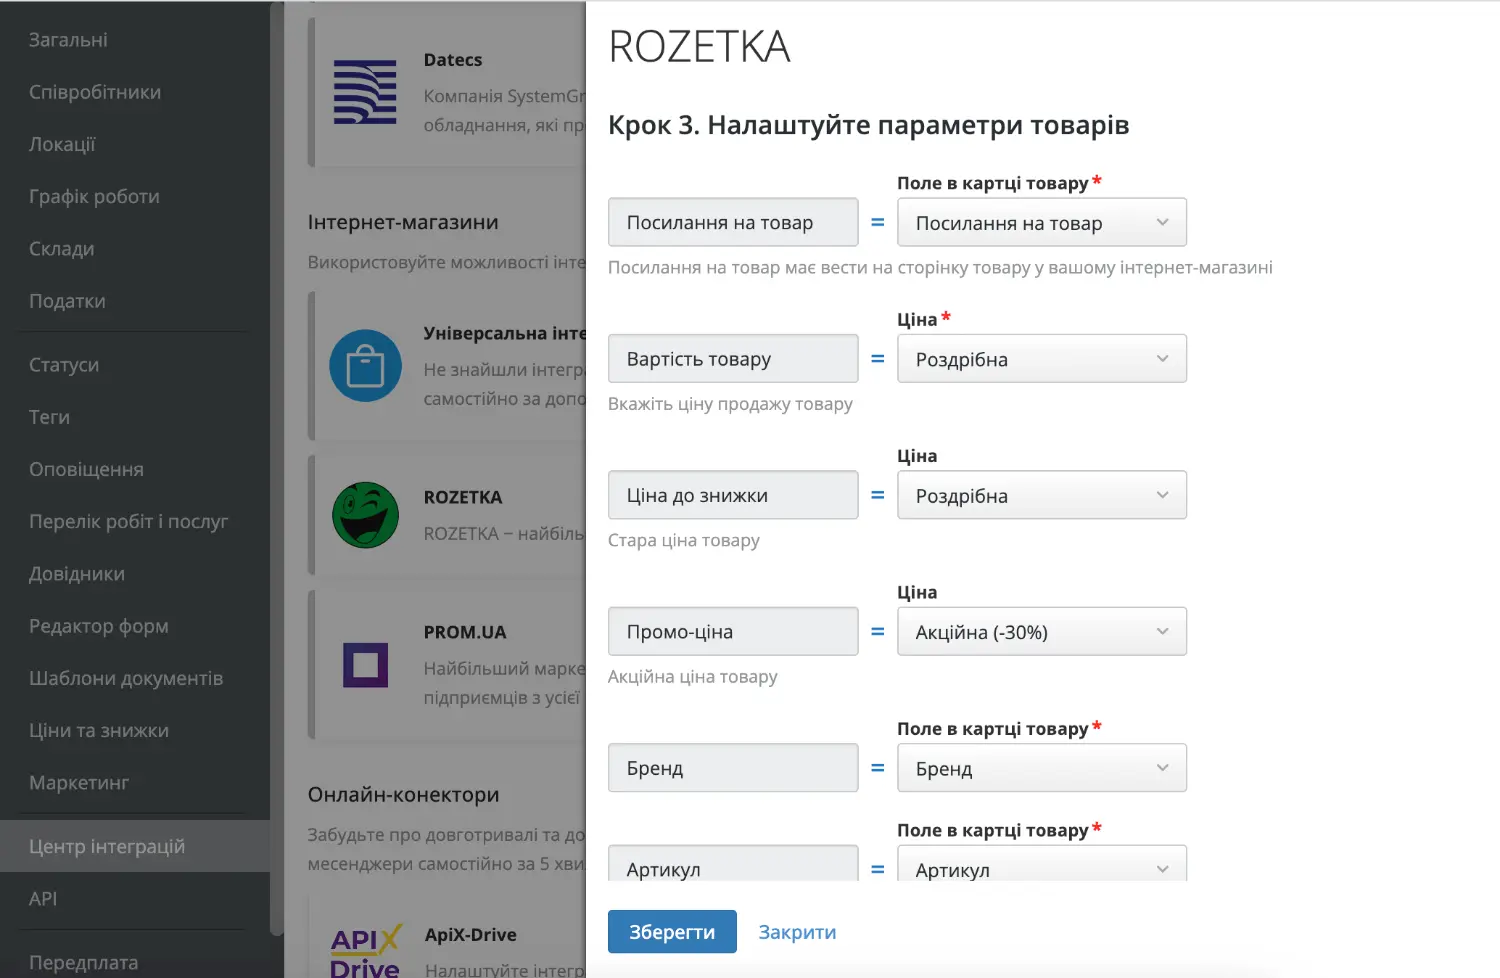 rozetka-warehouses-categories.webp (47 KB)